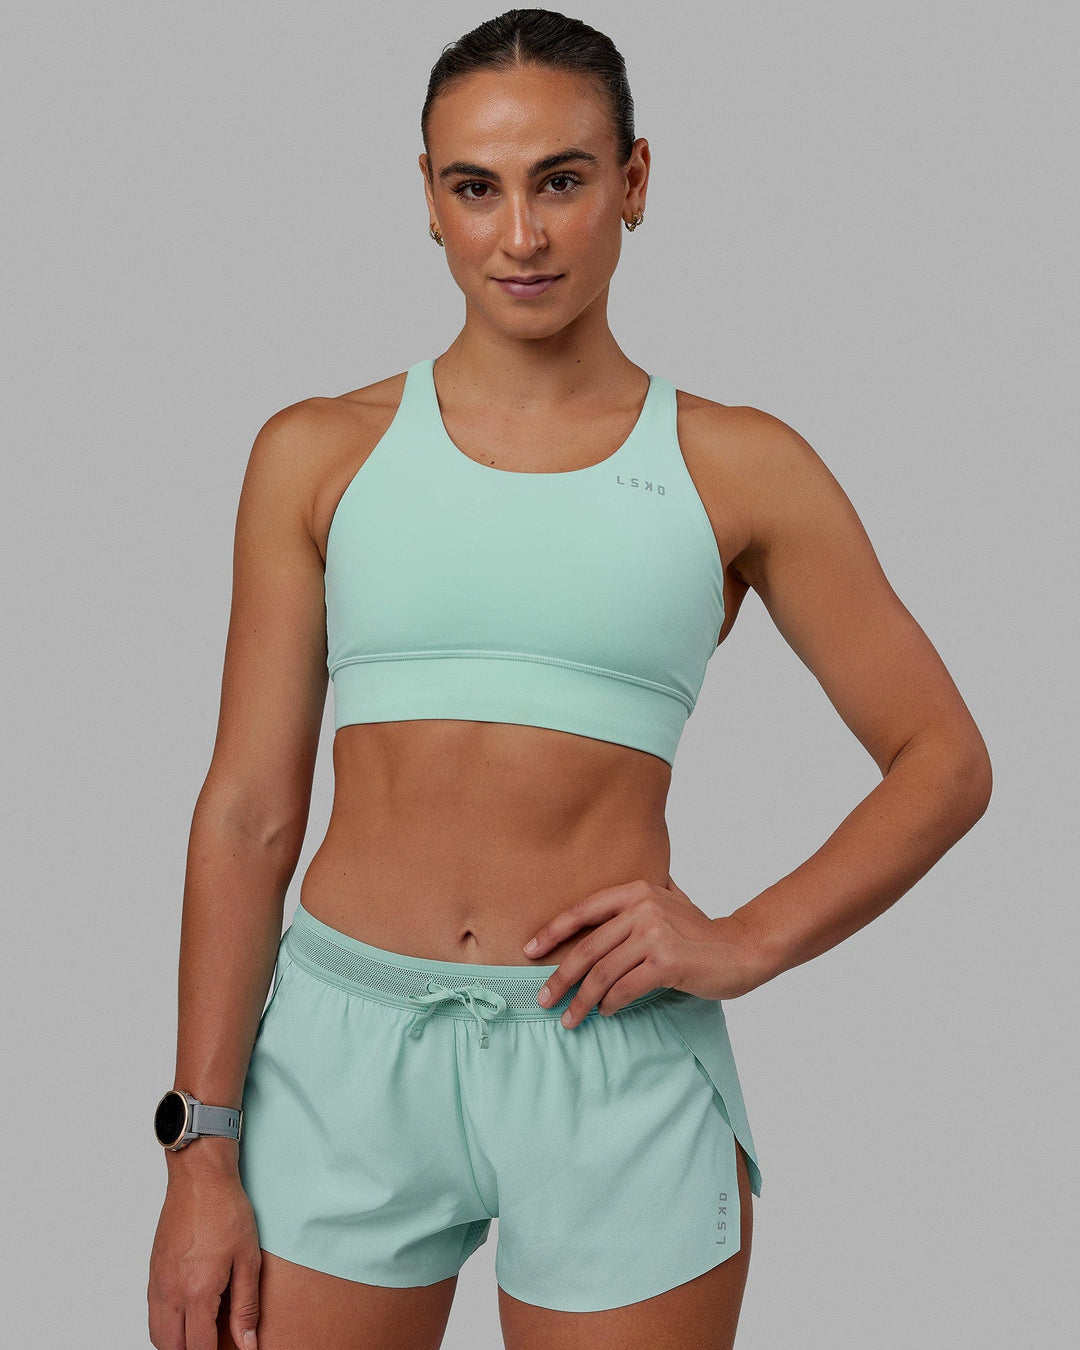 Woman wearing Accelerate Sports Bra - Pastel Turquoise